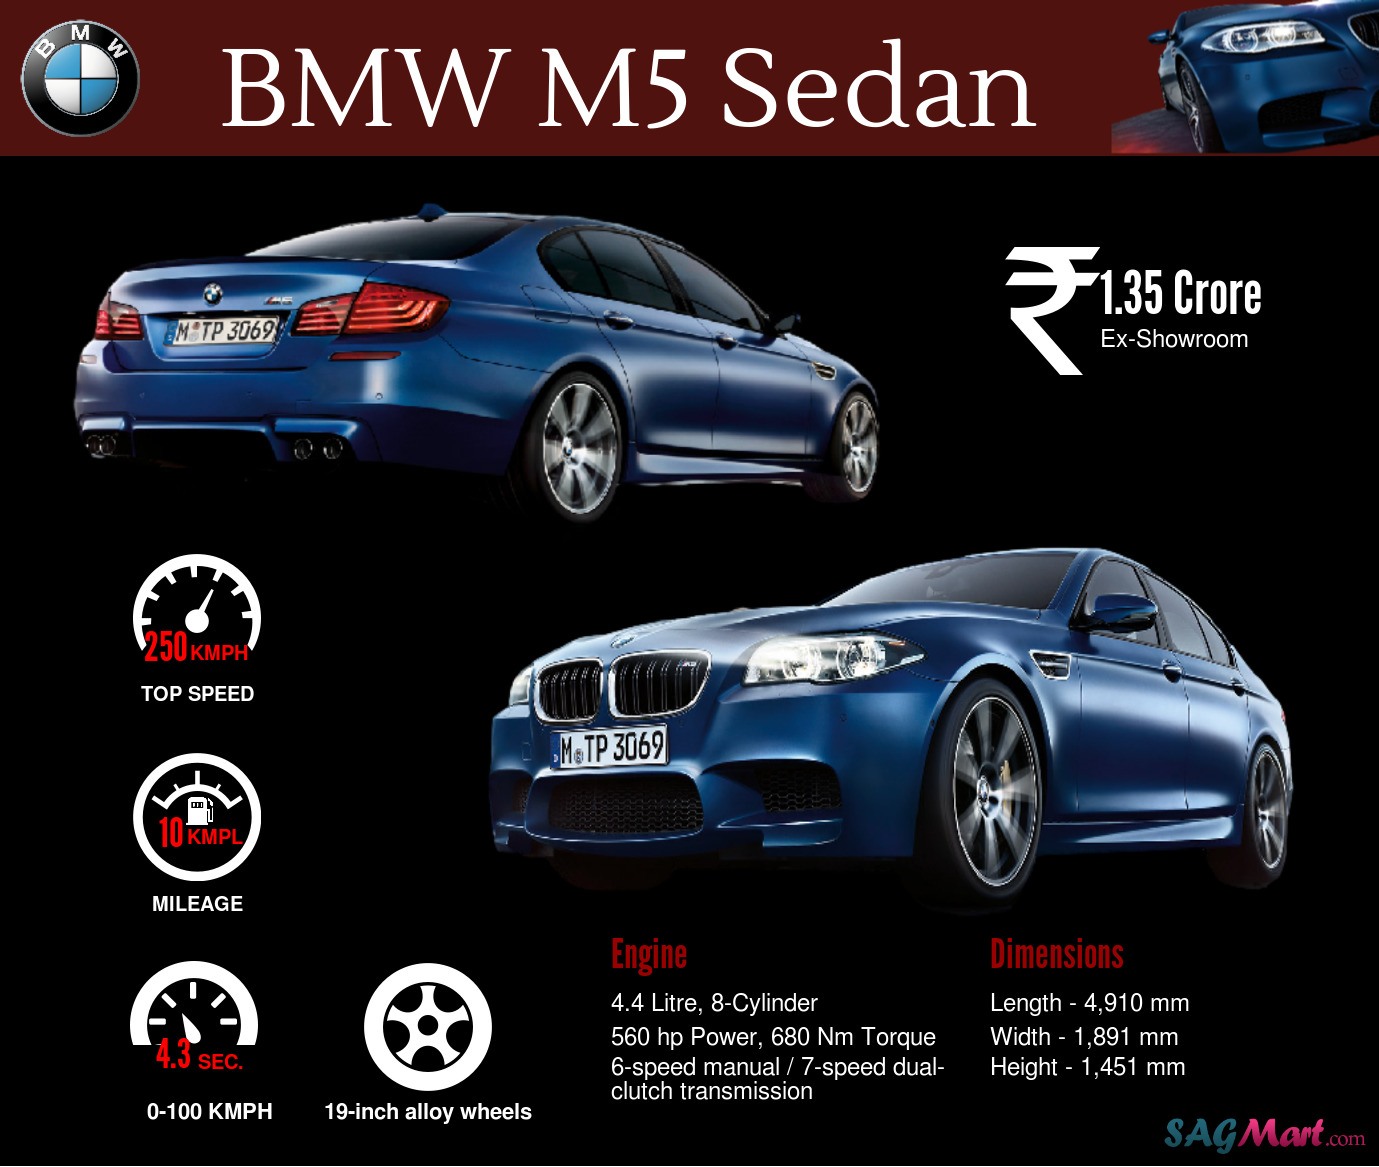 BMW M5 Luxury Sedan Specifications and Price Infographic | SAGMart